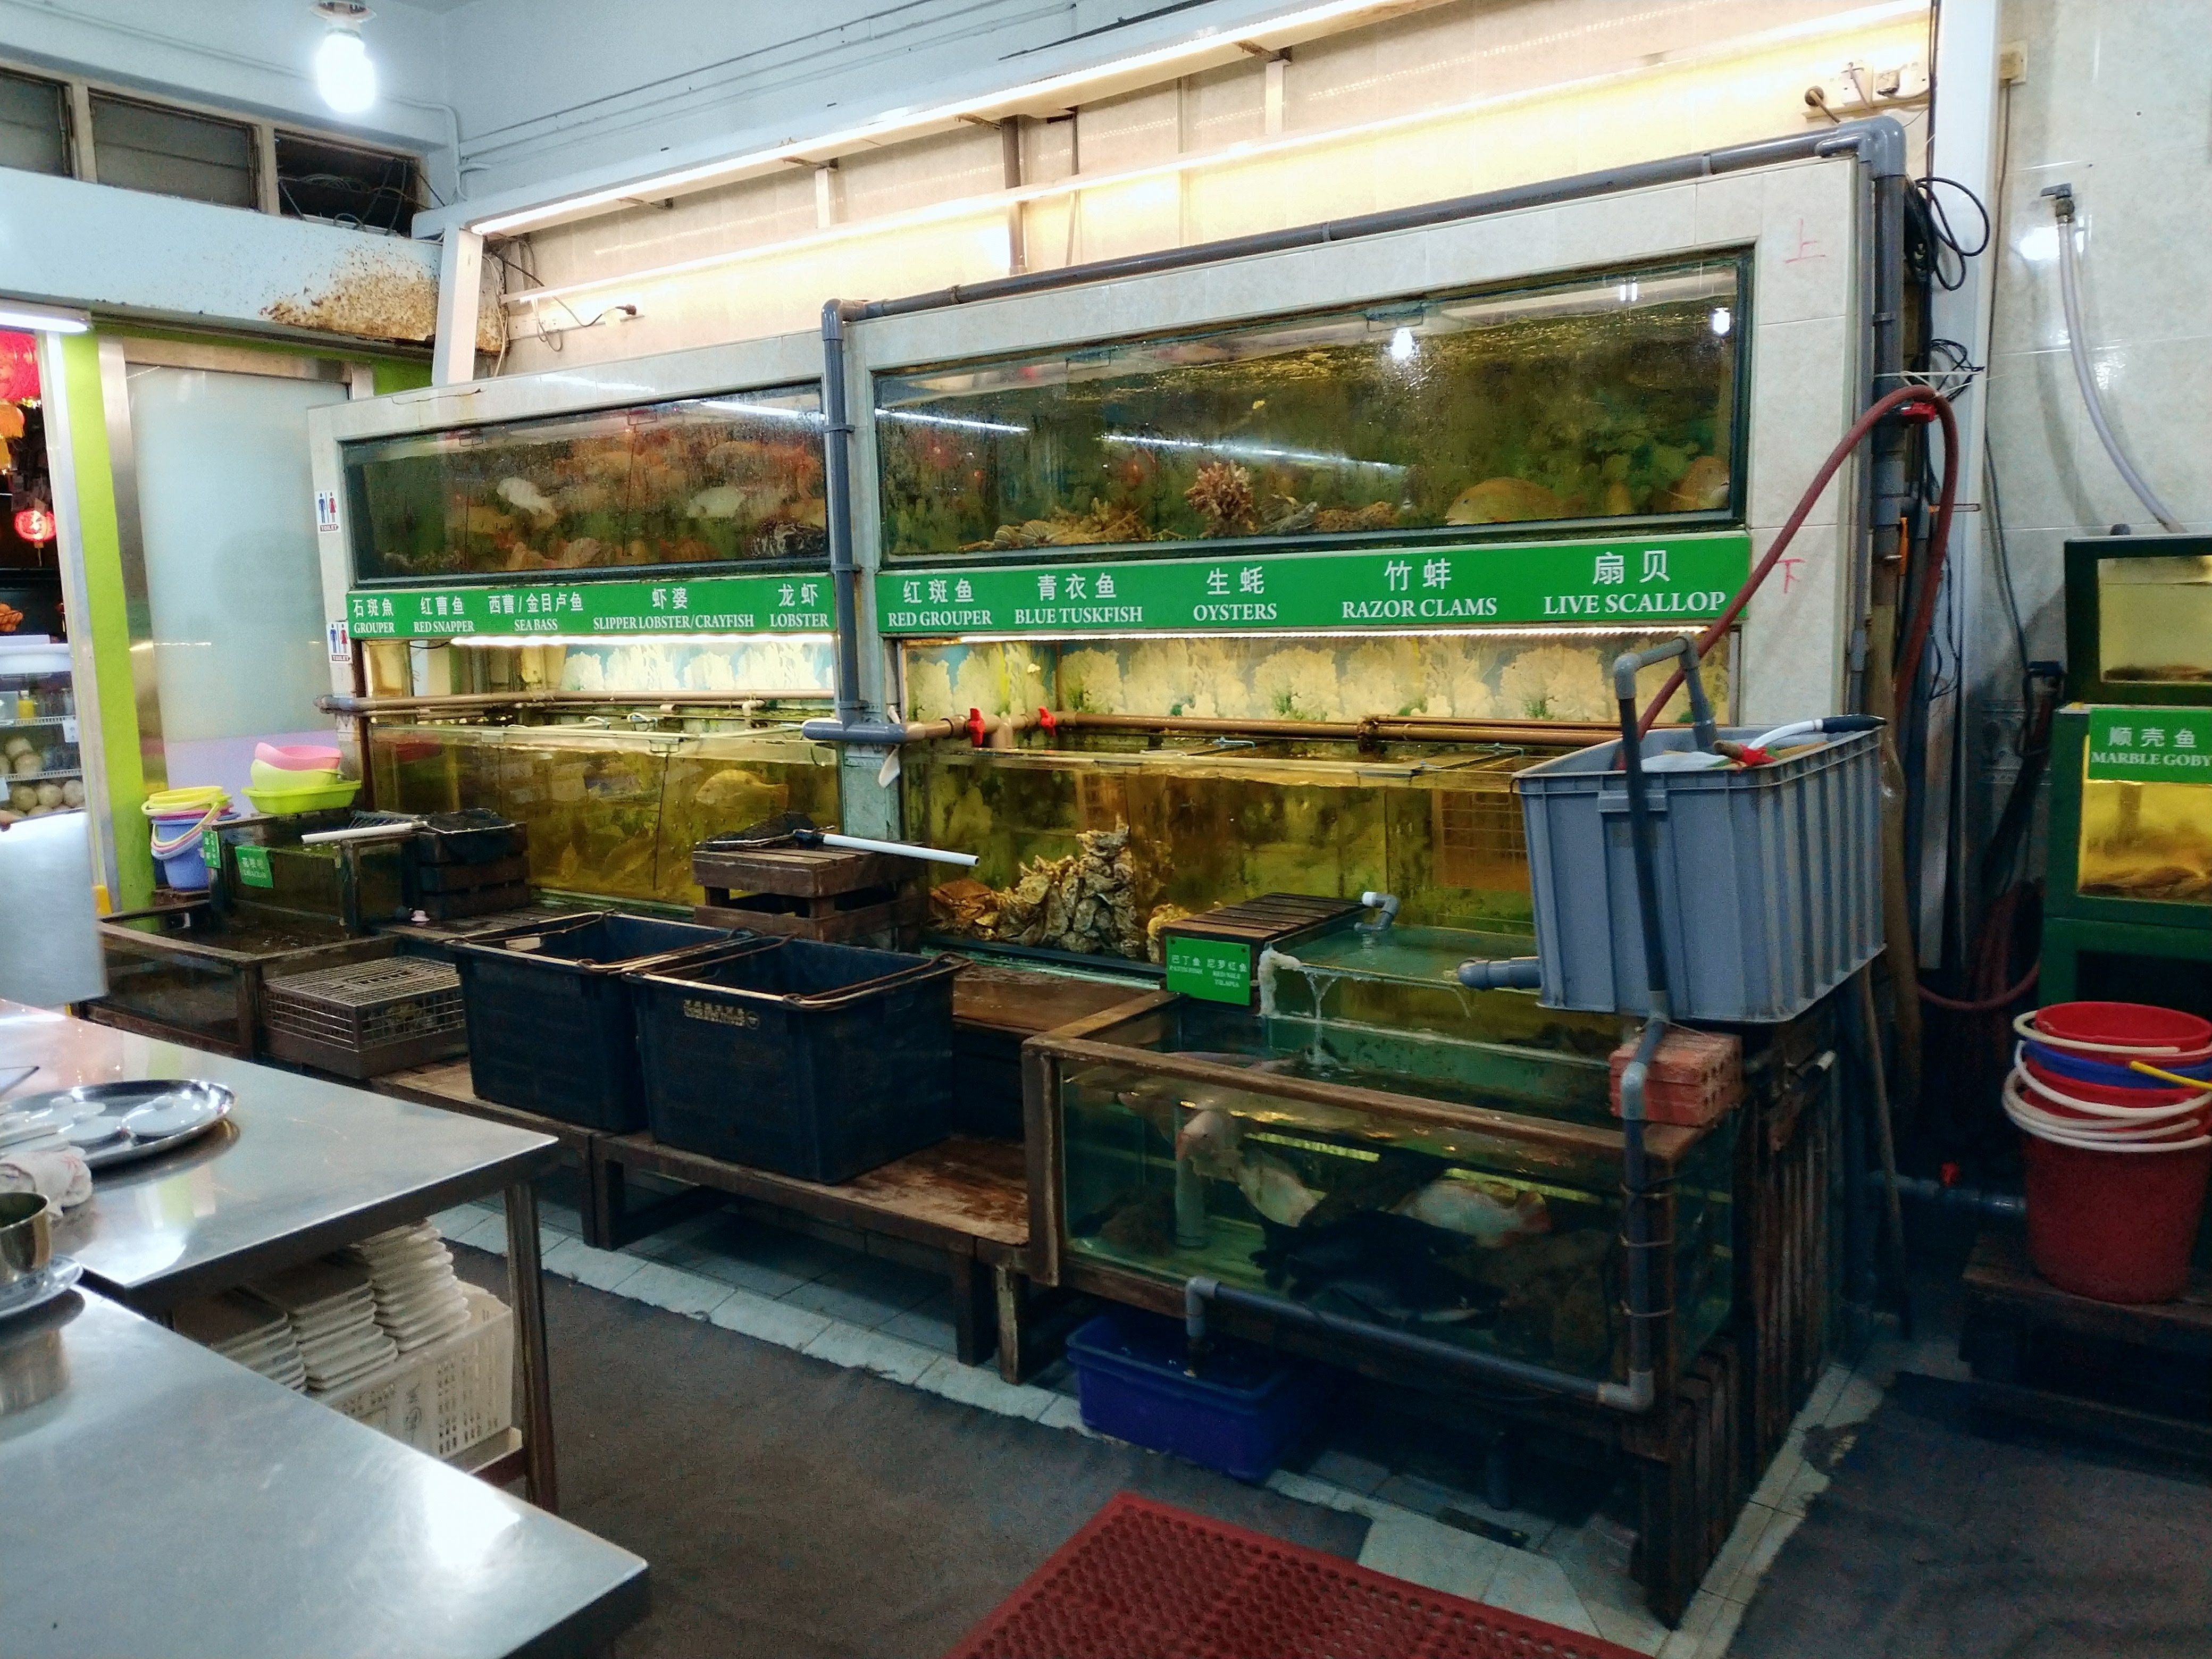 Singapore restaurant fresh seafood tanks